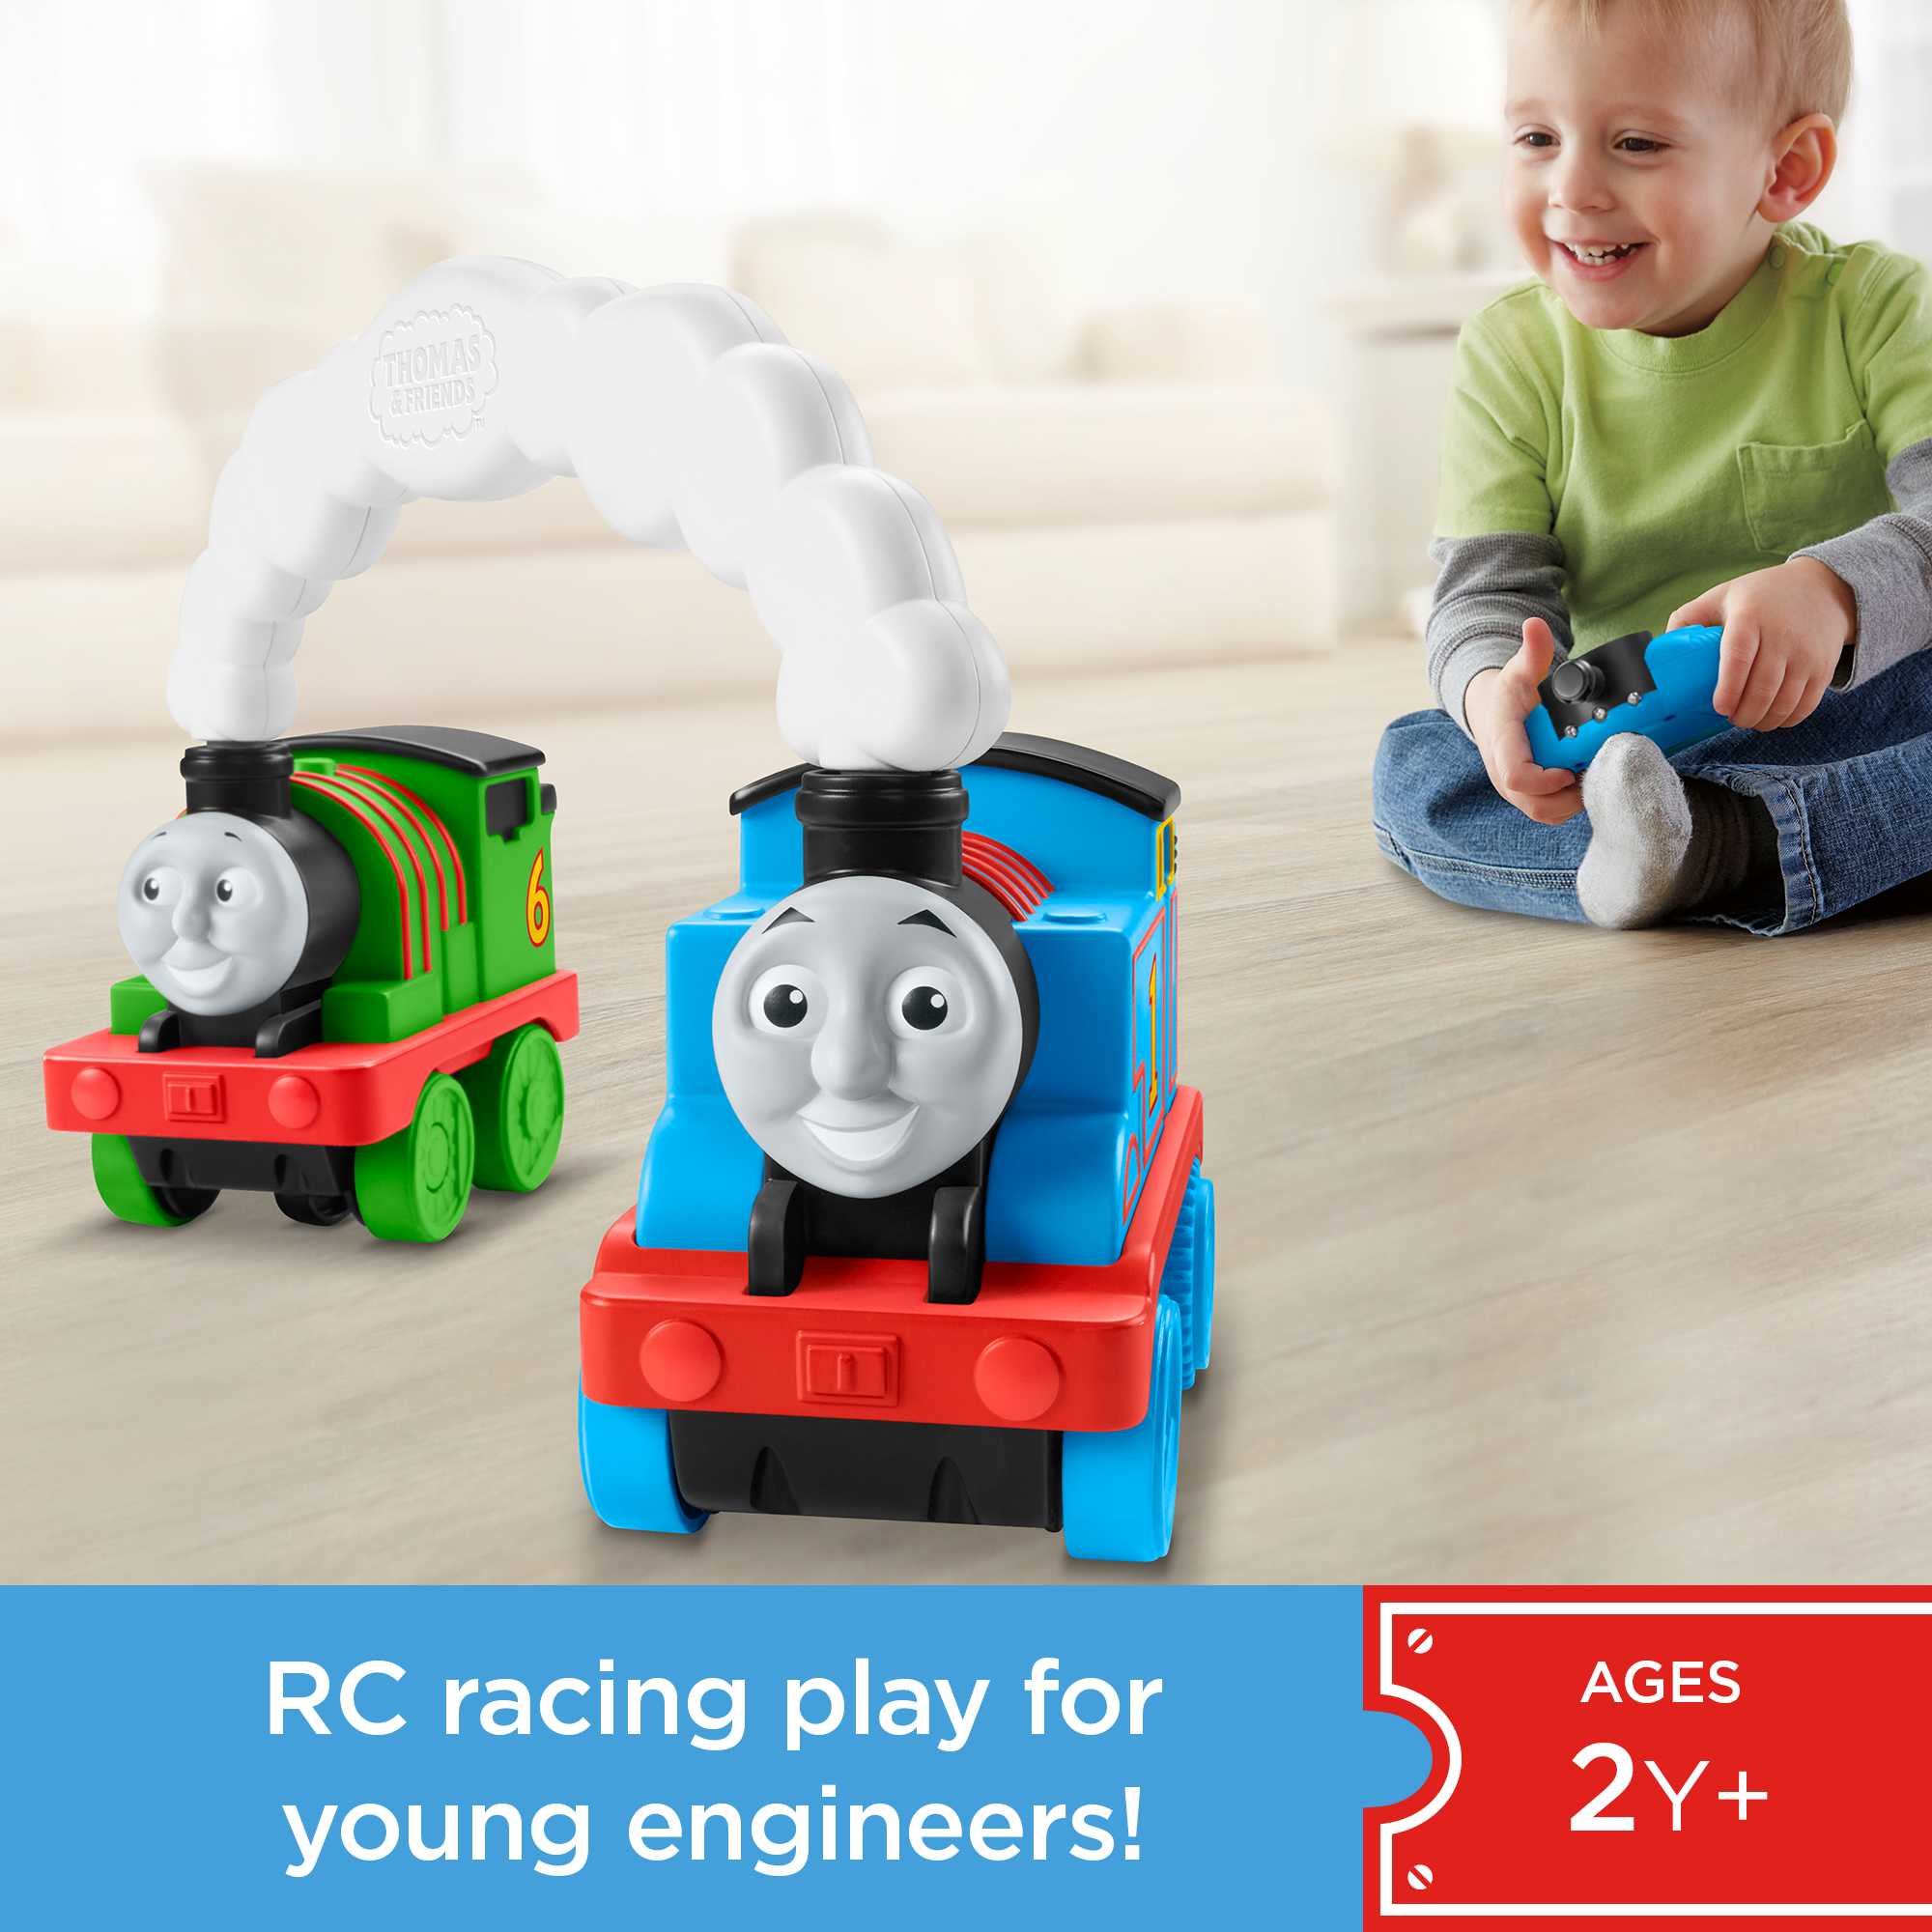 Thomas & Friends Race & Chase R/C Train Engines | Mattel